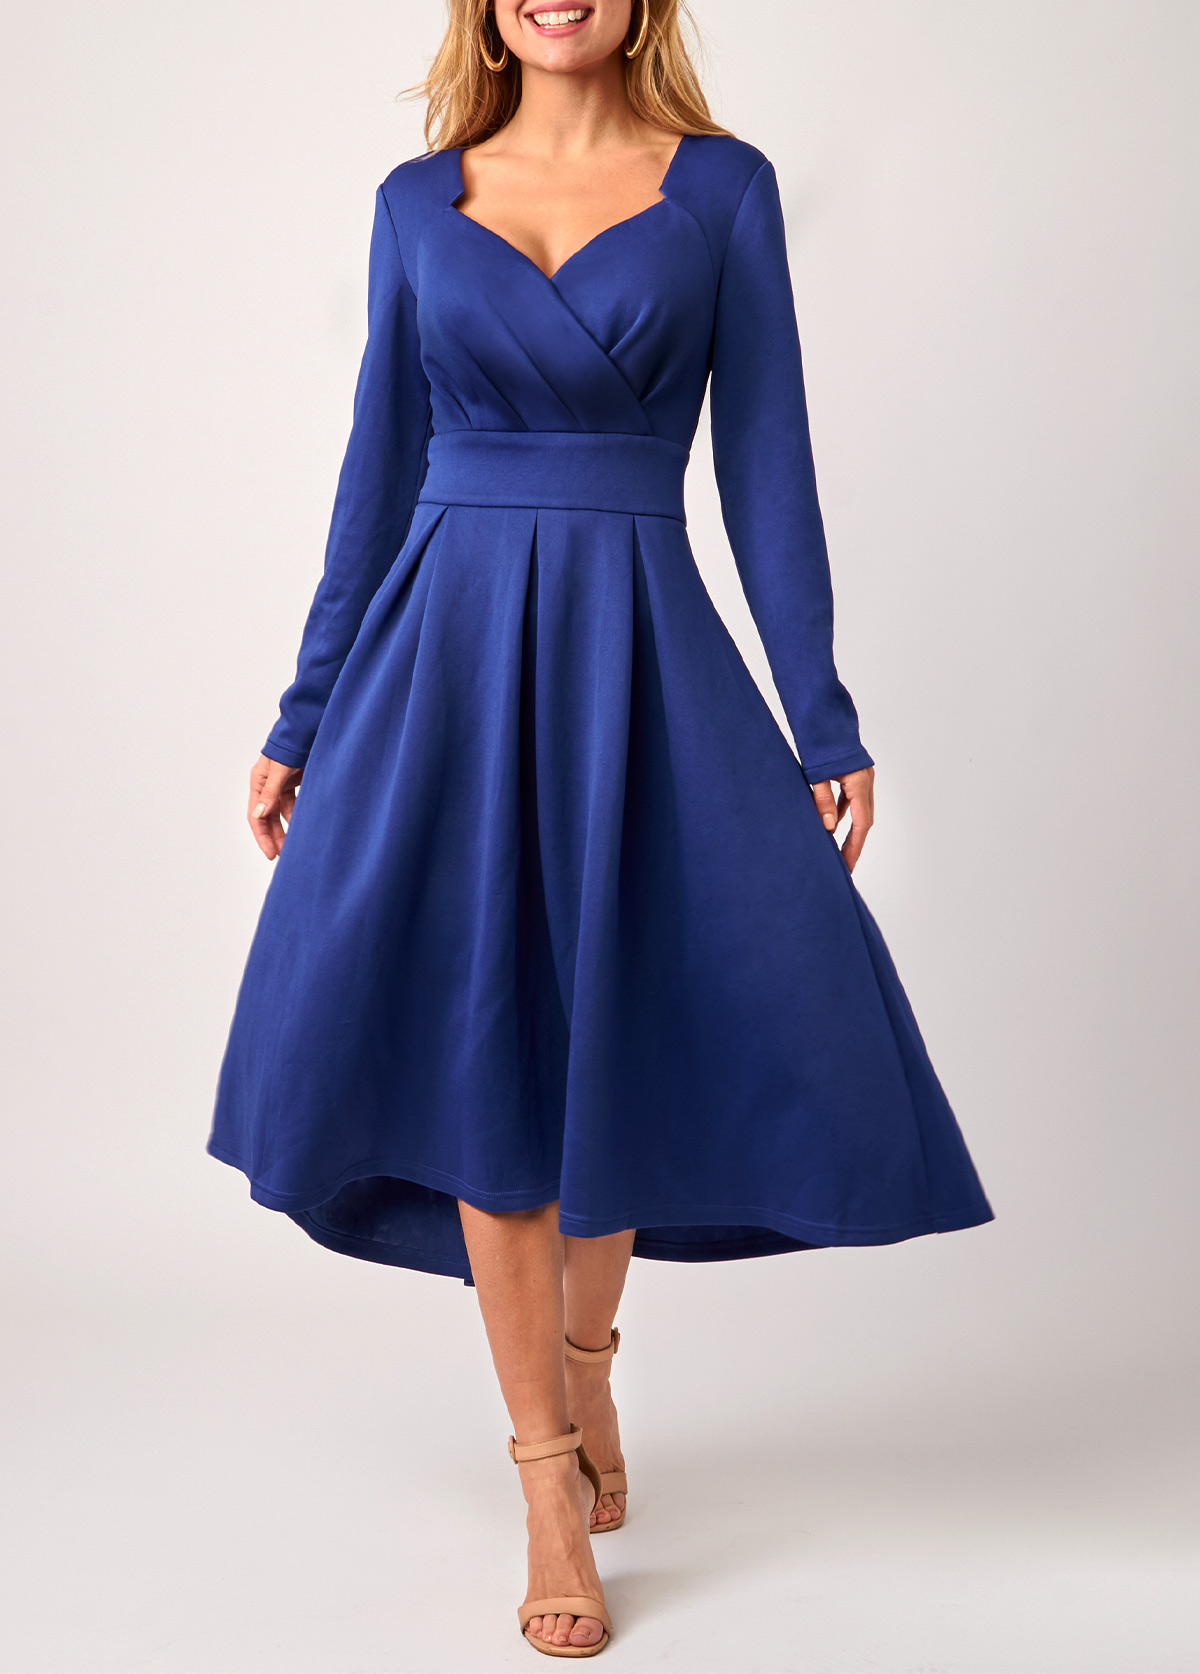 Long Sleeve Royal Blue Cross Front Dress